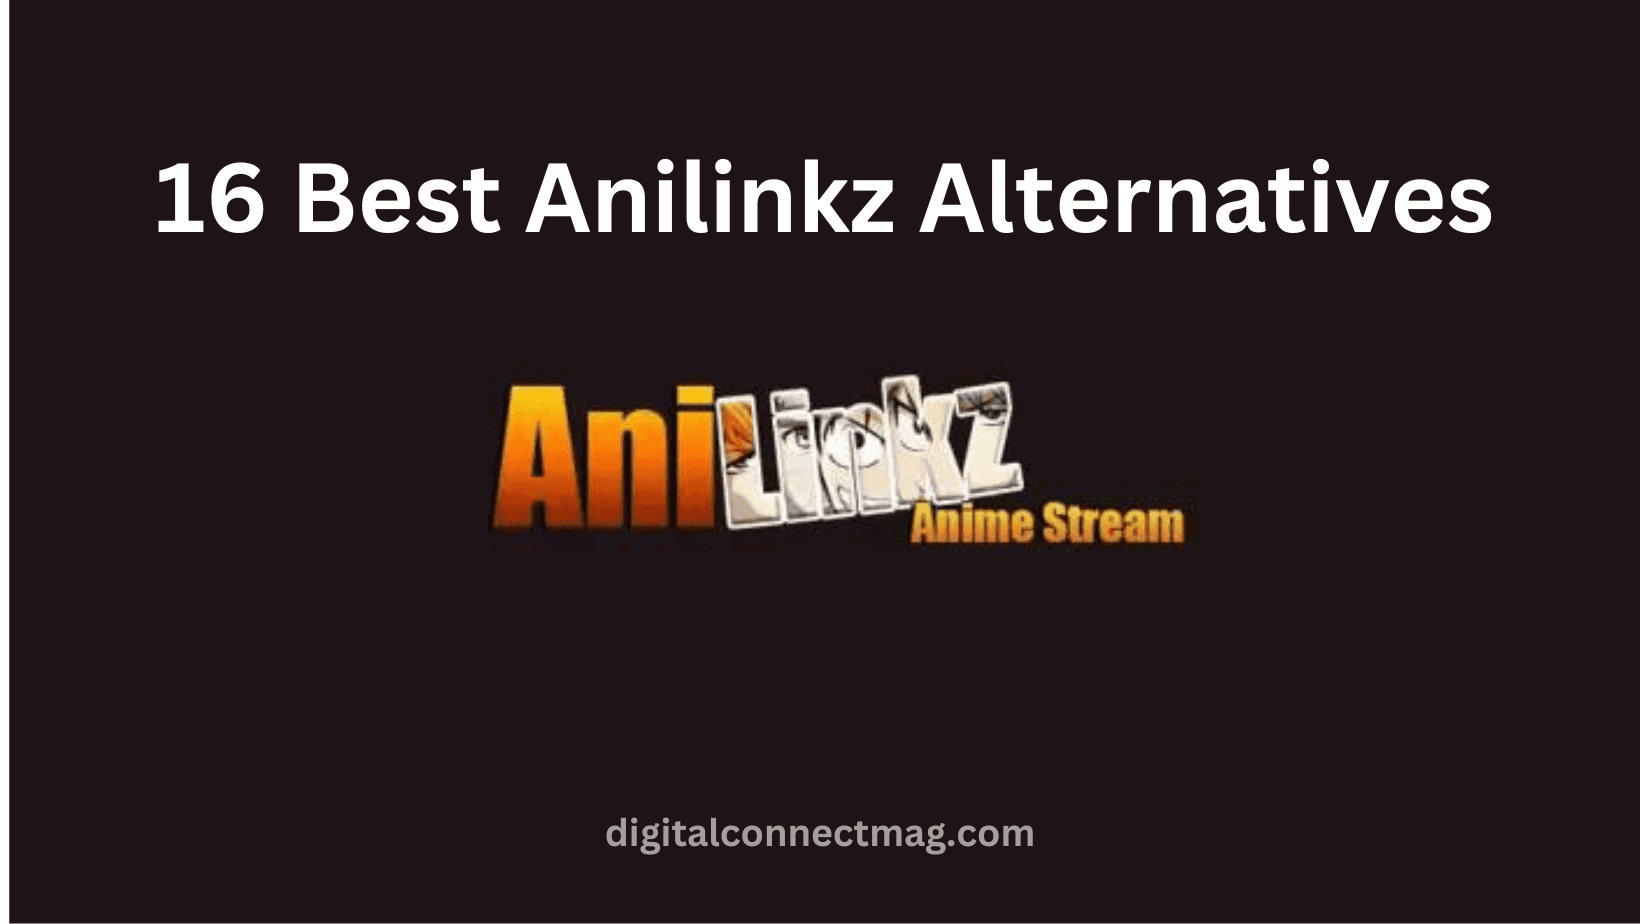 16 Best Anilinkz Alternatives